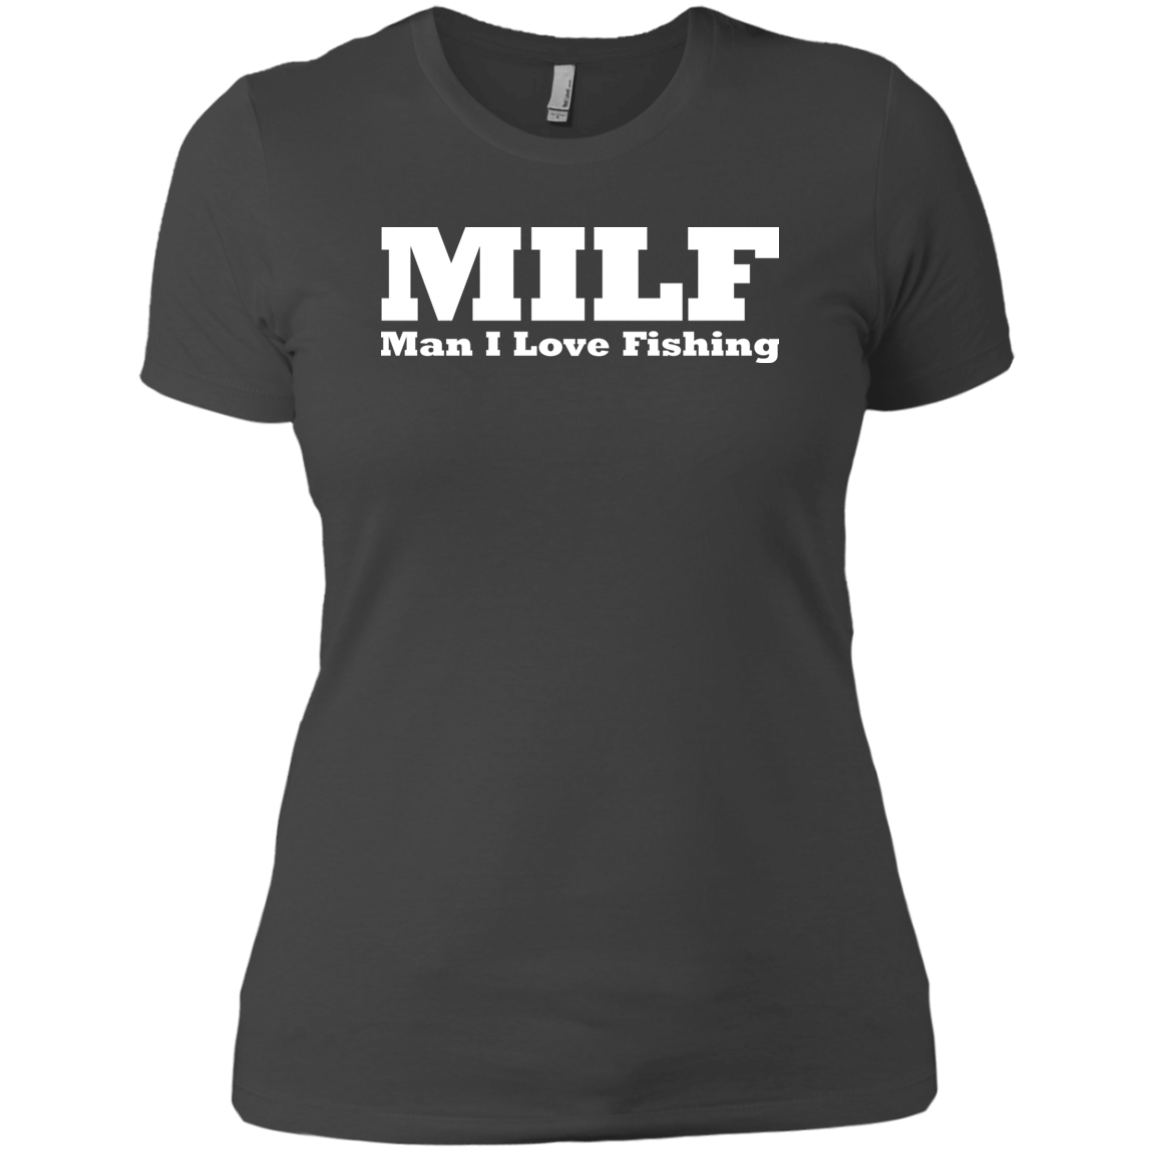 MILF - Man I Love Fishing